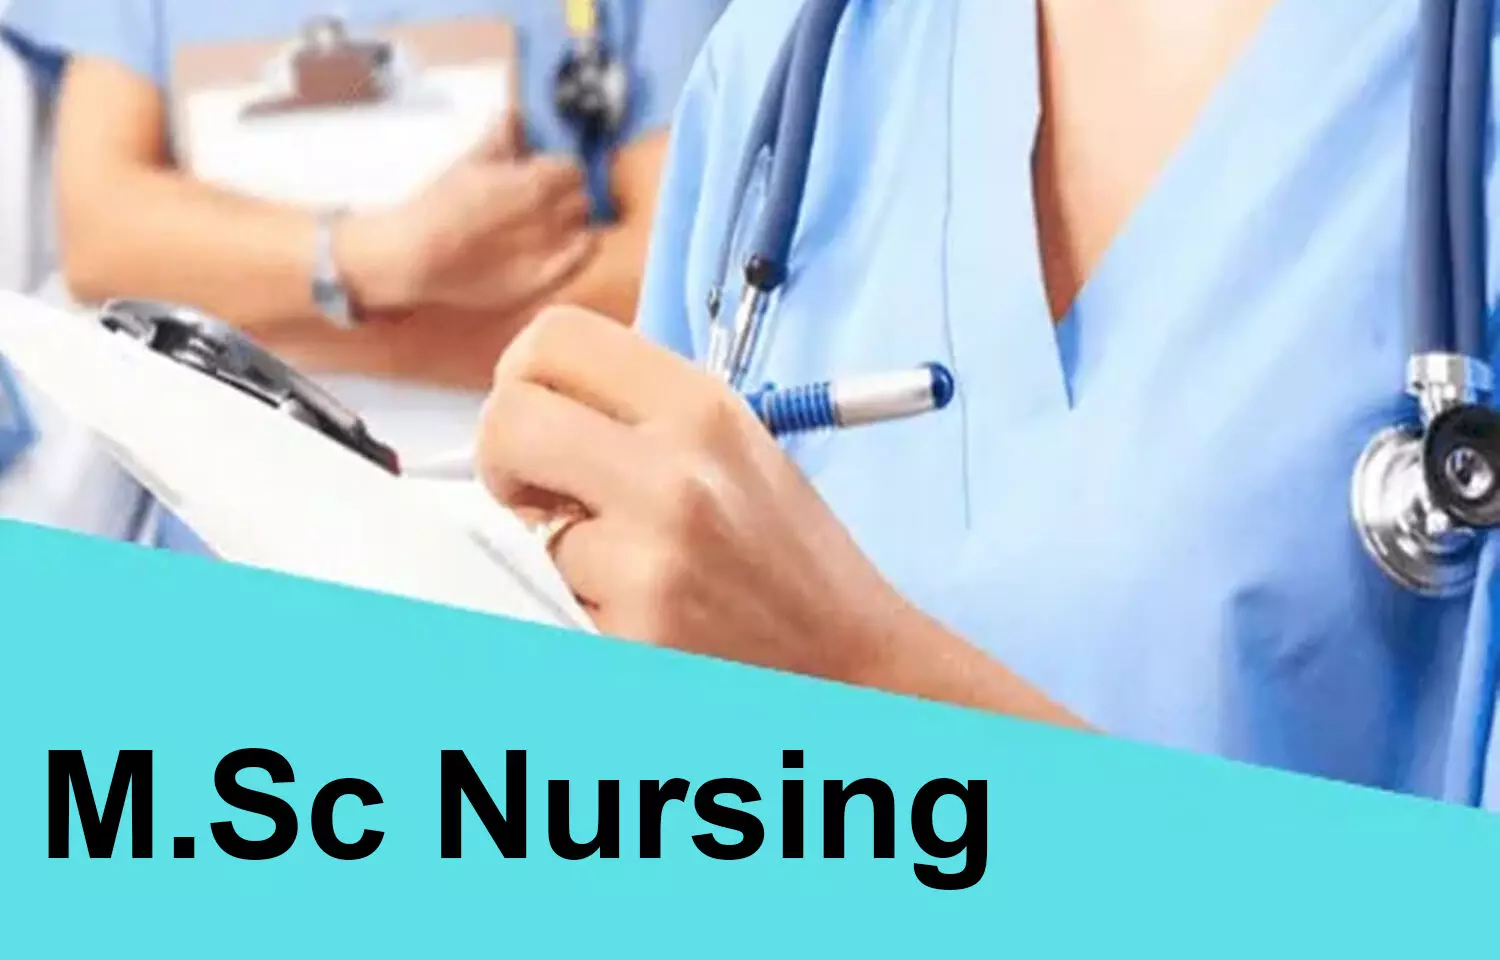 MSc Nursing 2021 at AIIMS: Final Status, Admit Card, Exam Date rescheduled